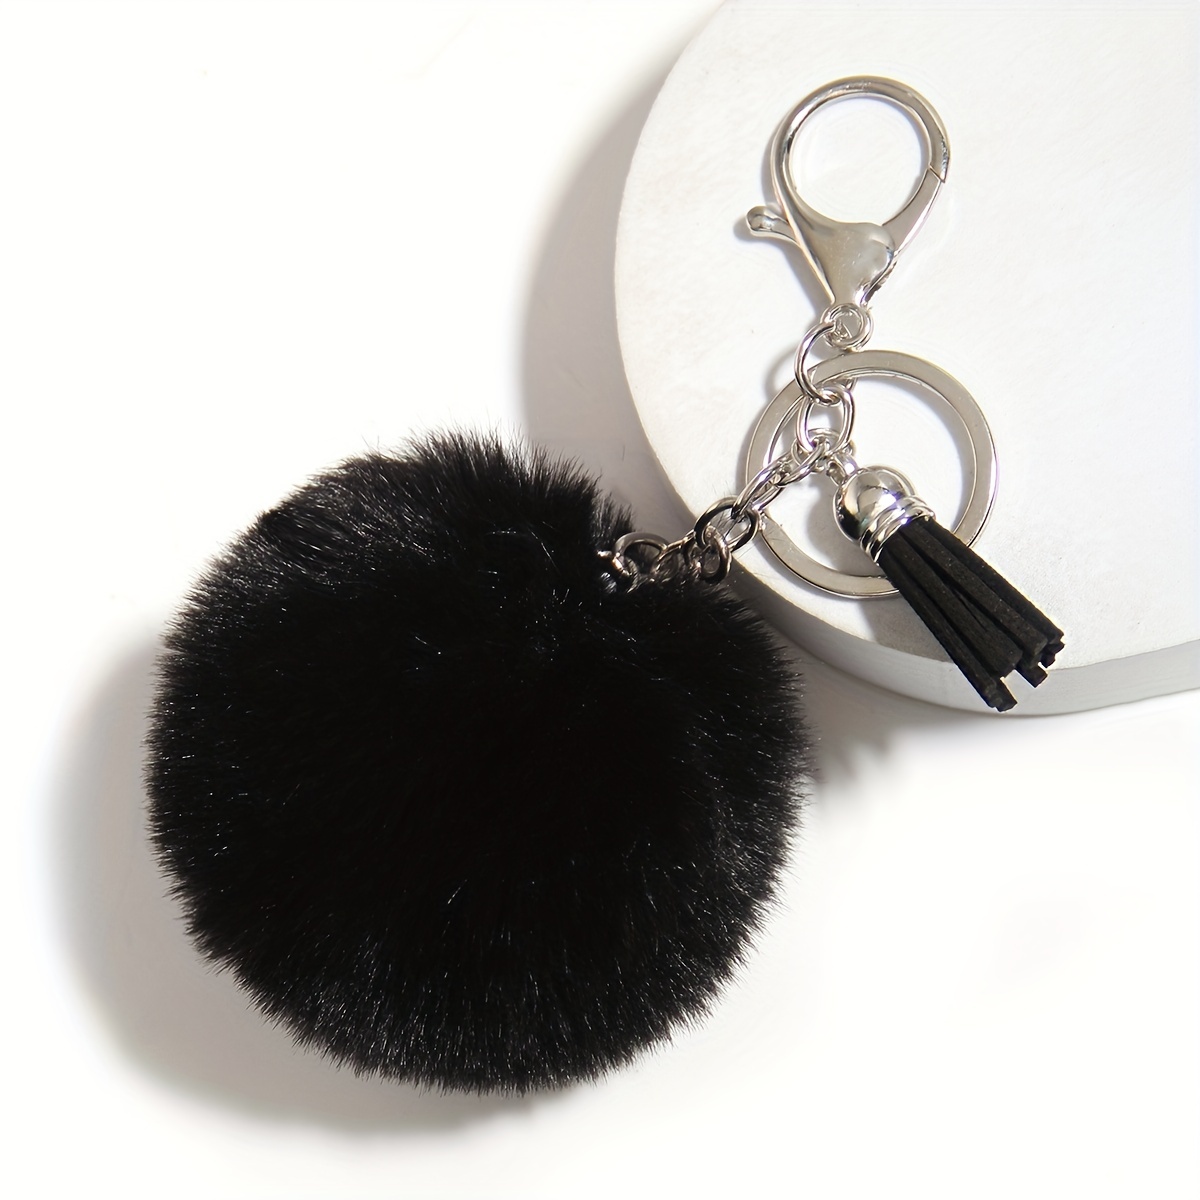 Cute Ball Pom Pom Keychain Women Bag Car Key Chain Charm Pendant (Black)